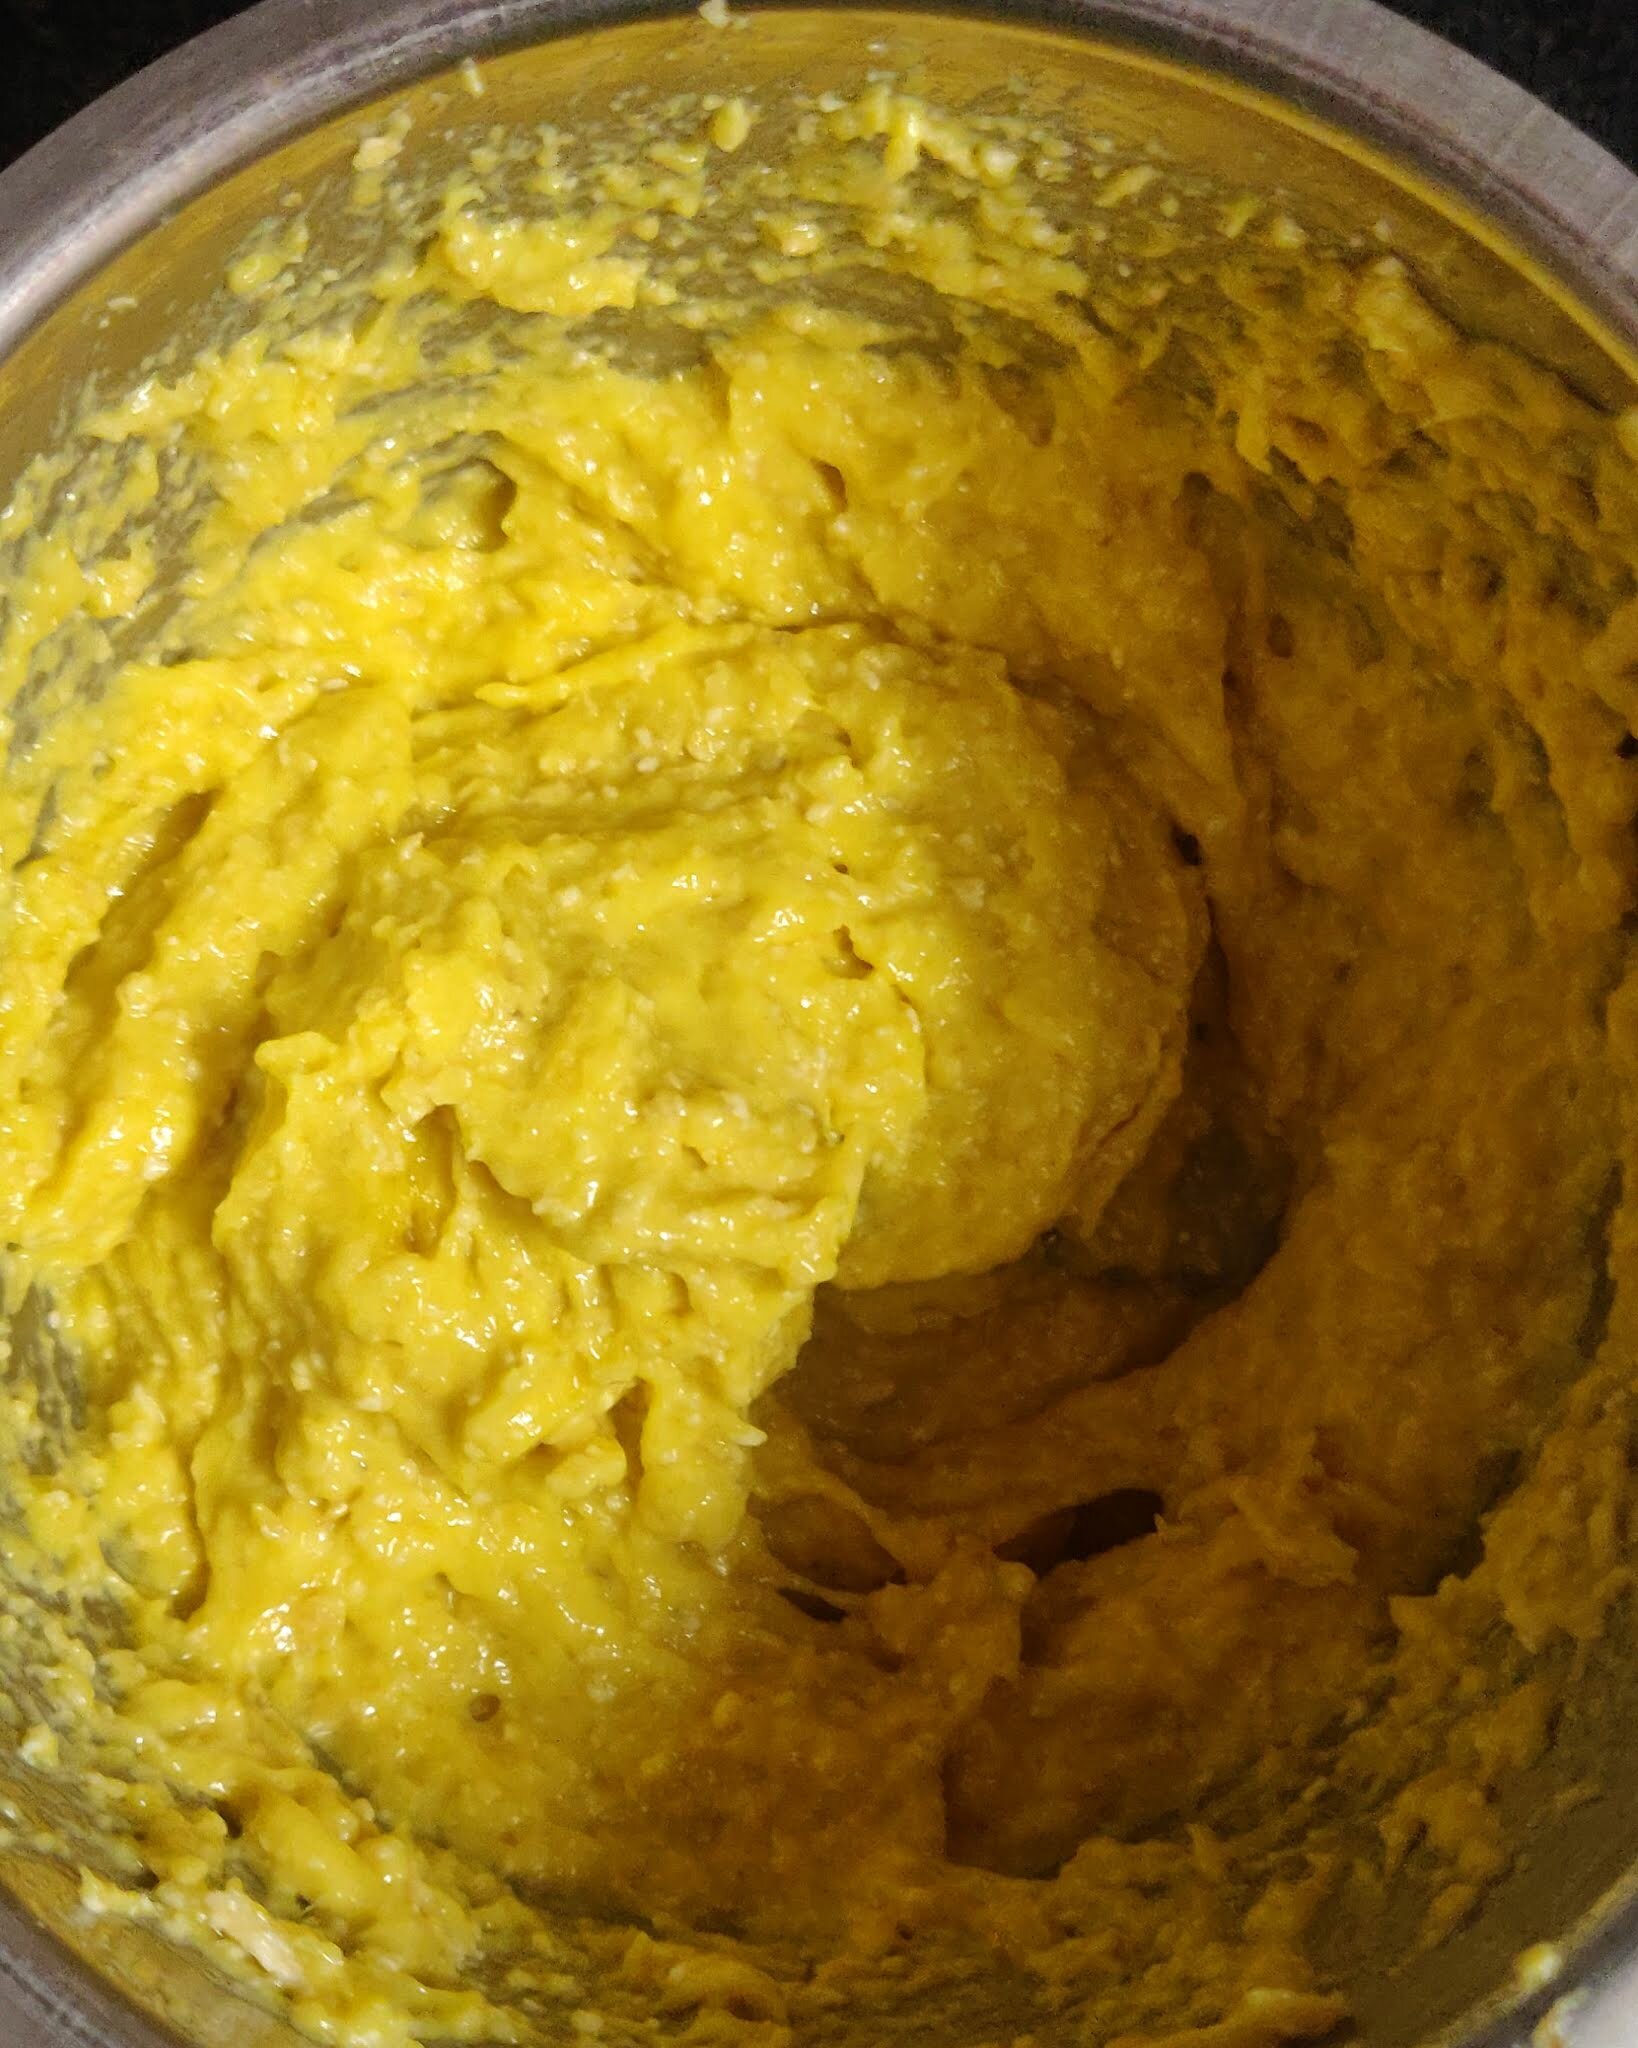 Blended mango oats mixture.